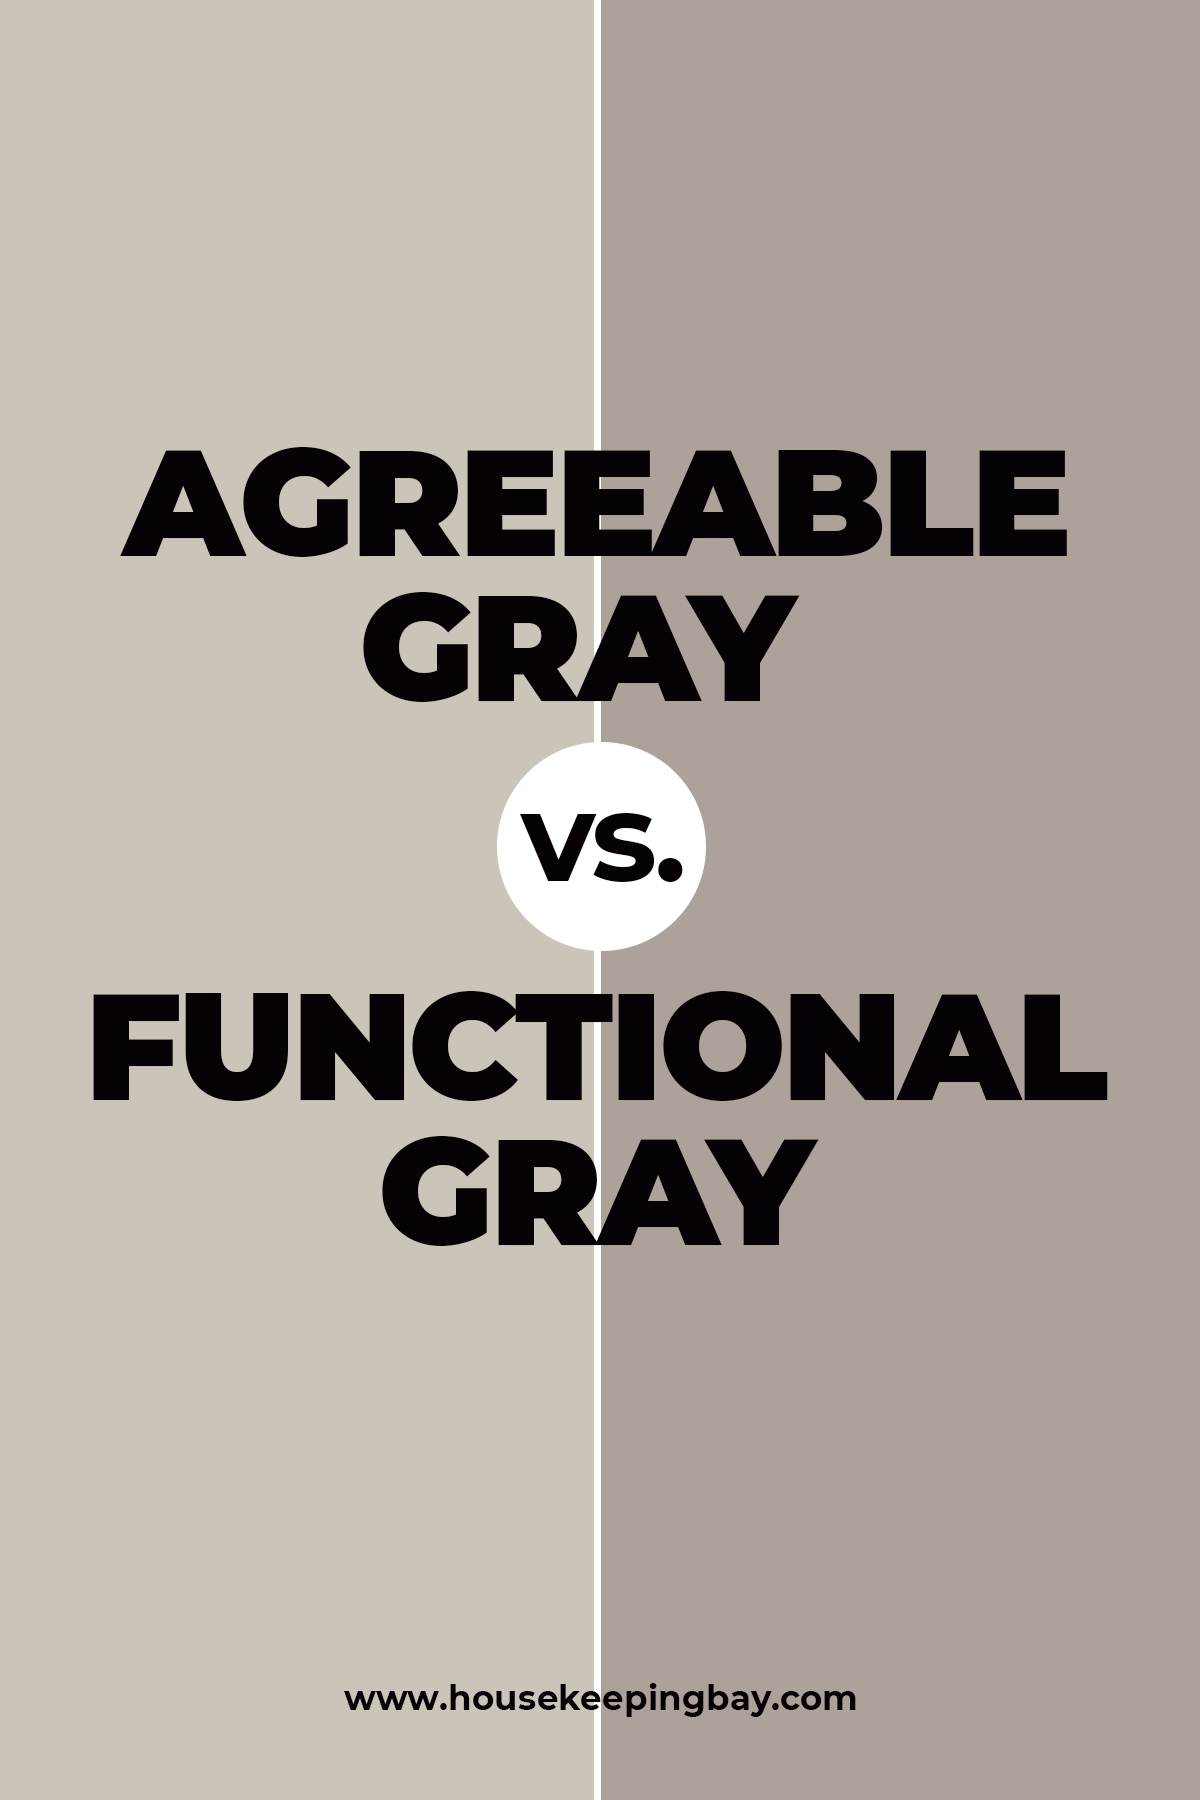 Agreeable Gray vs Functional Gray